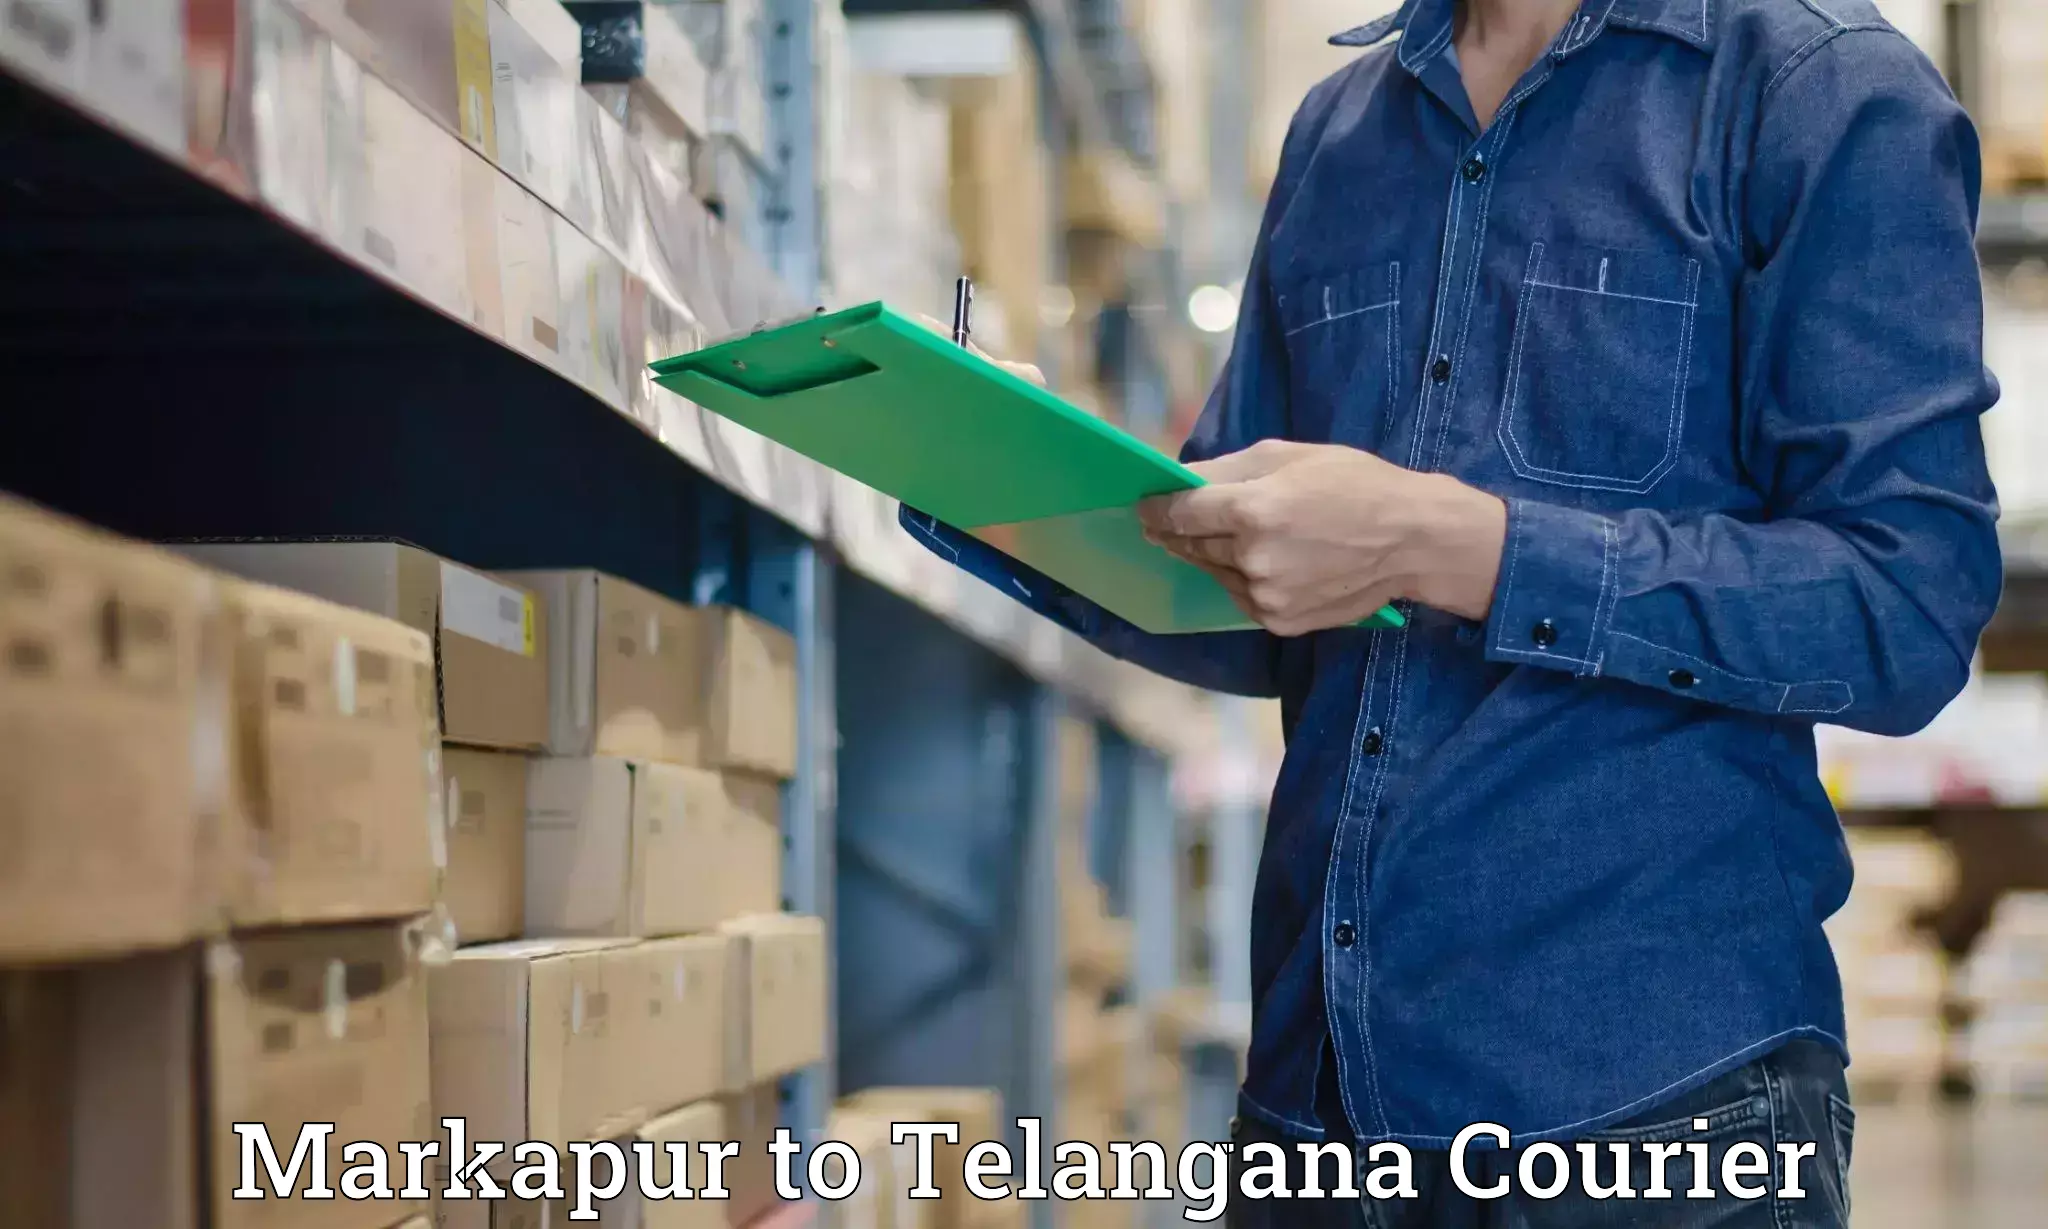 Courier service partnerships Markapur to Narayanpet